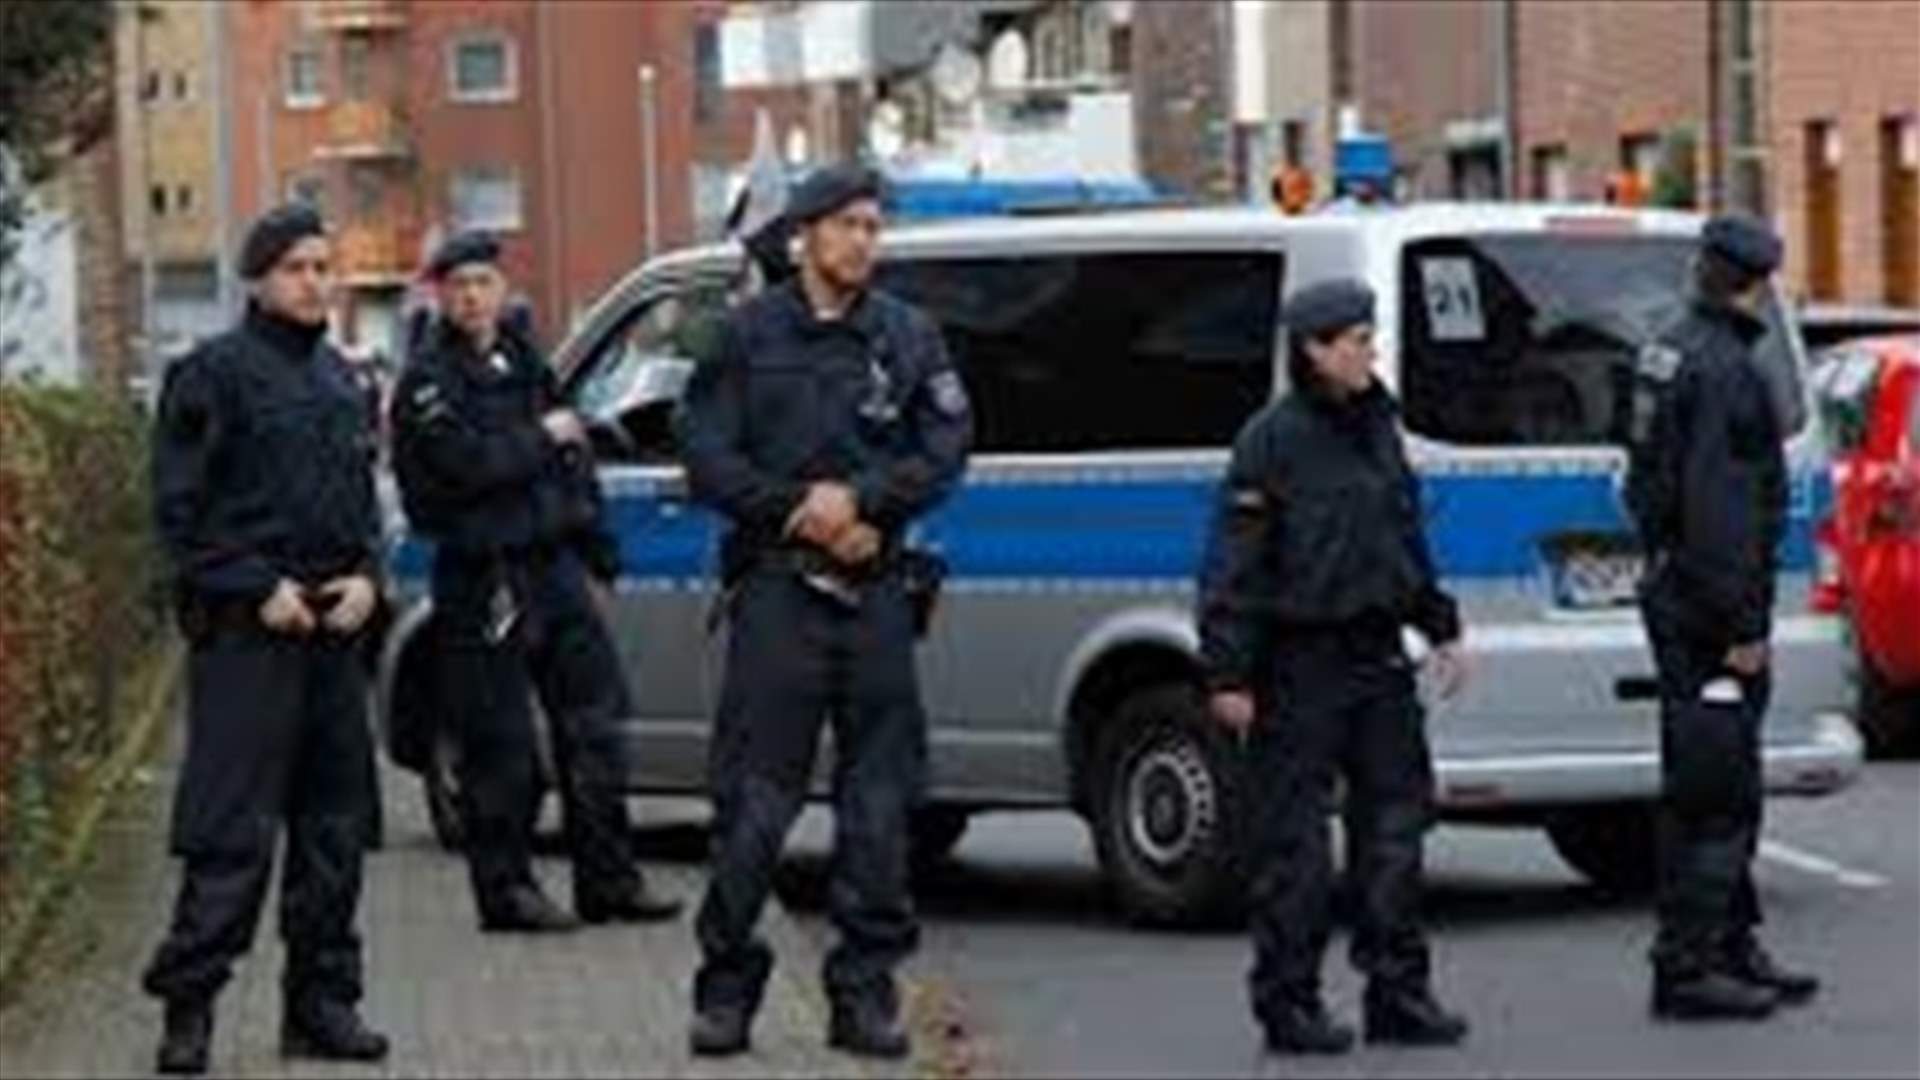 German officials say report of armed man at school was false alarm